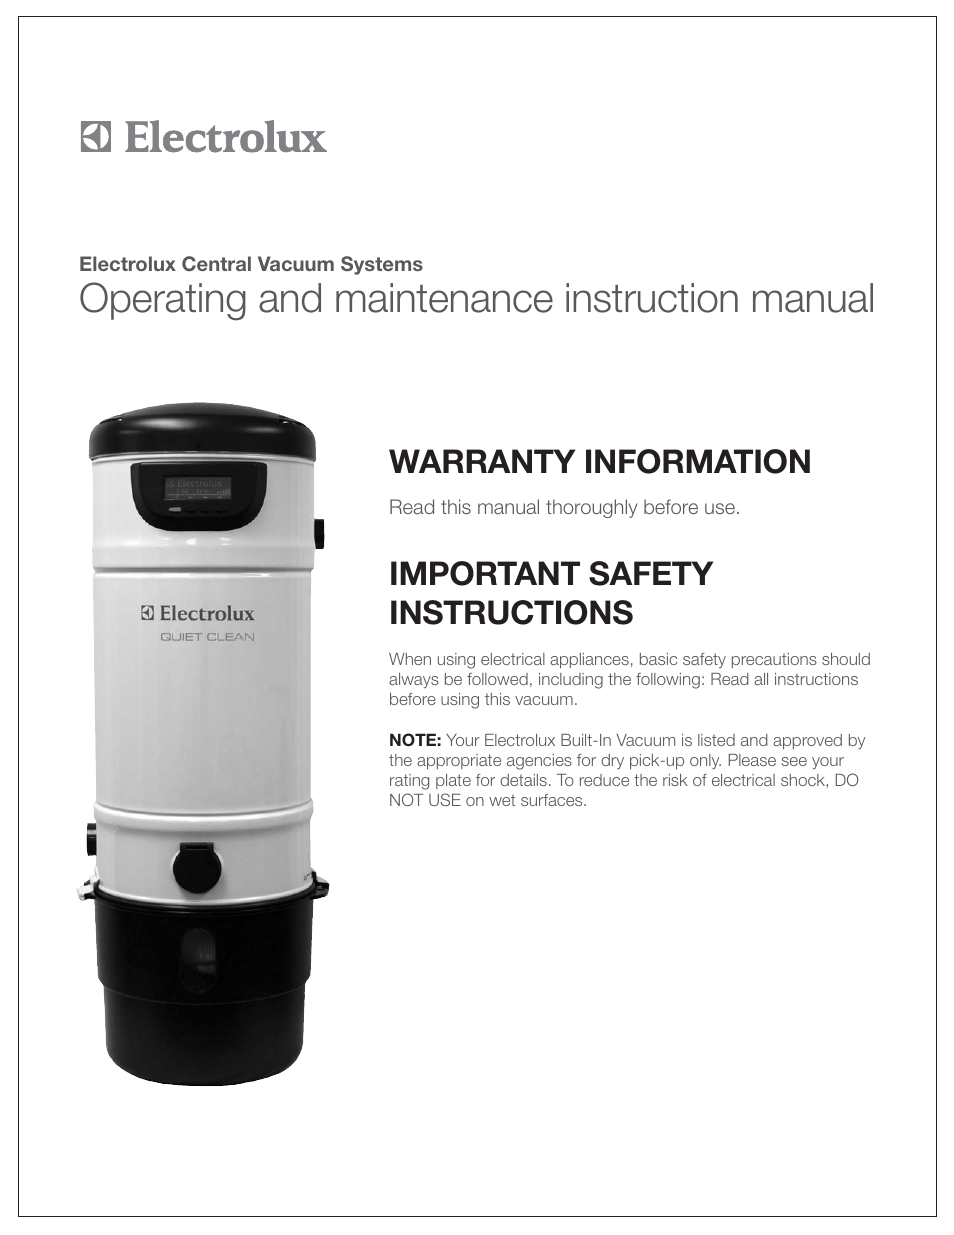 Operating and maintenance instruction manual, Warranty information